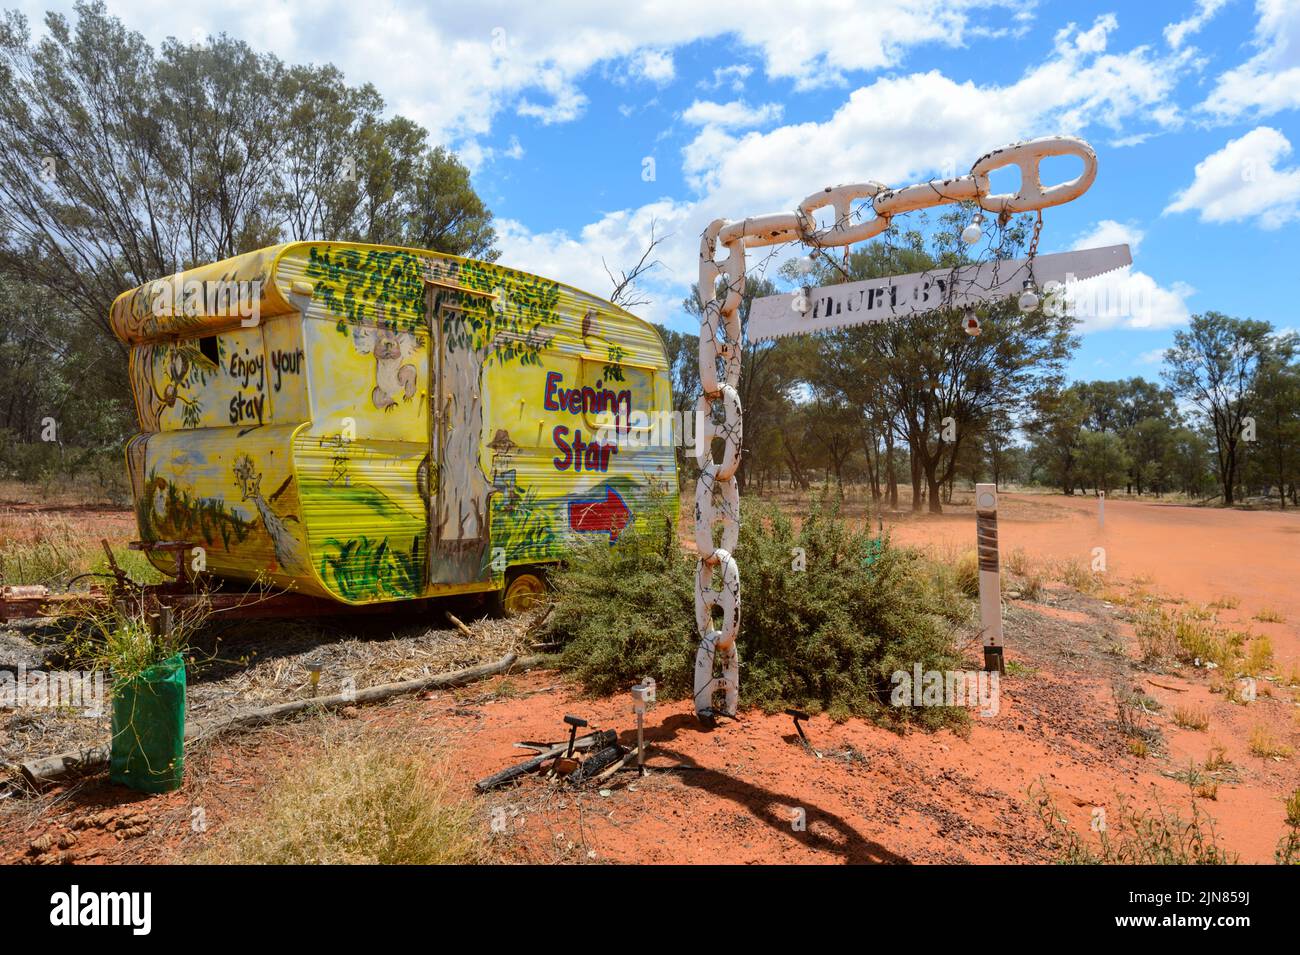 Decorated caravan advertising the Evening Star Tourist Park, Queensland, QLD, Australia Stock Photo